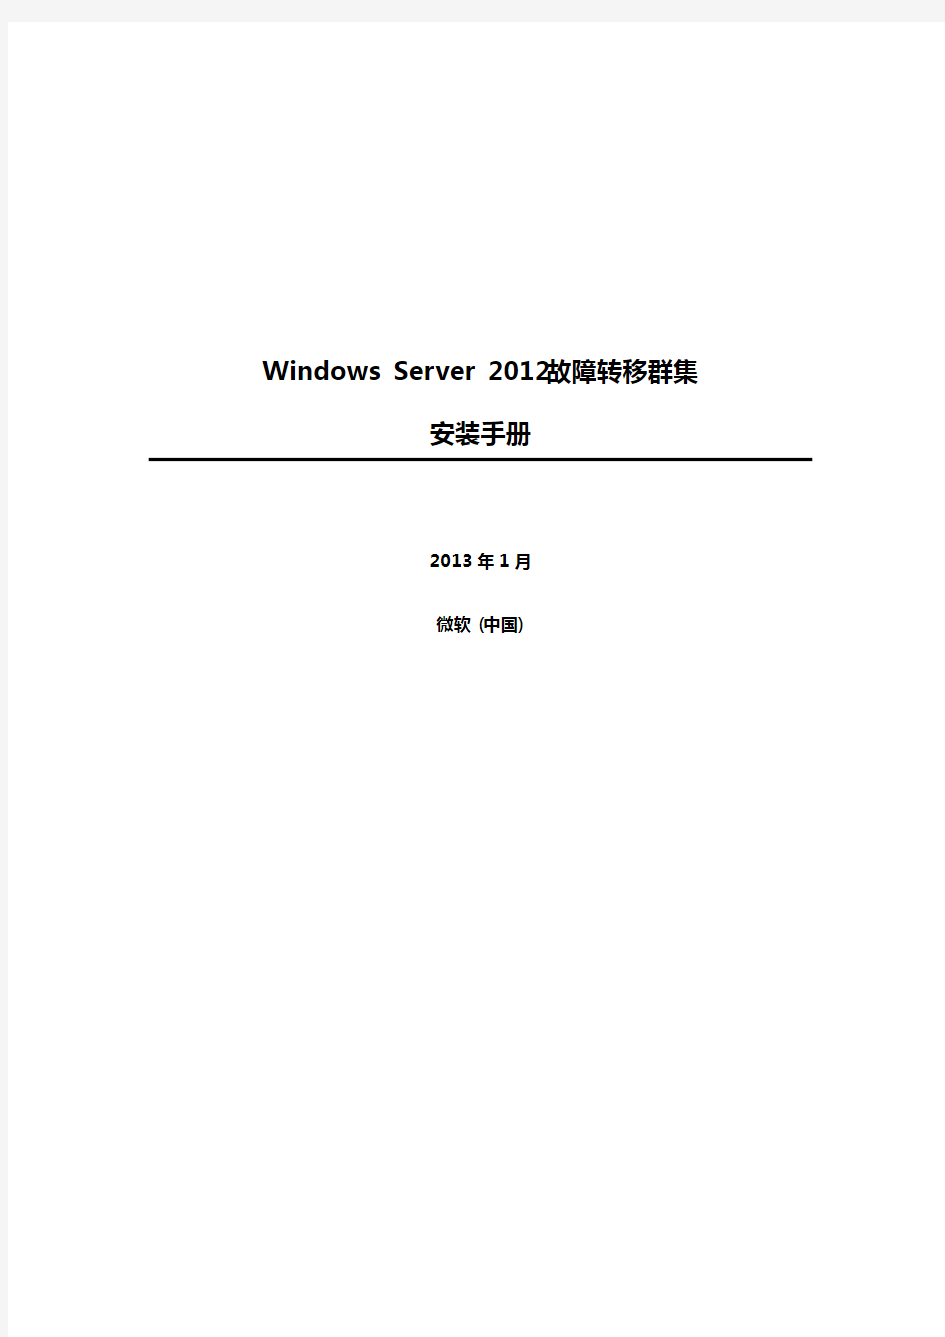 Windows Server 2012 故障转移群集 安装手册